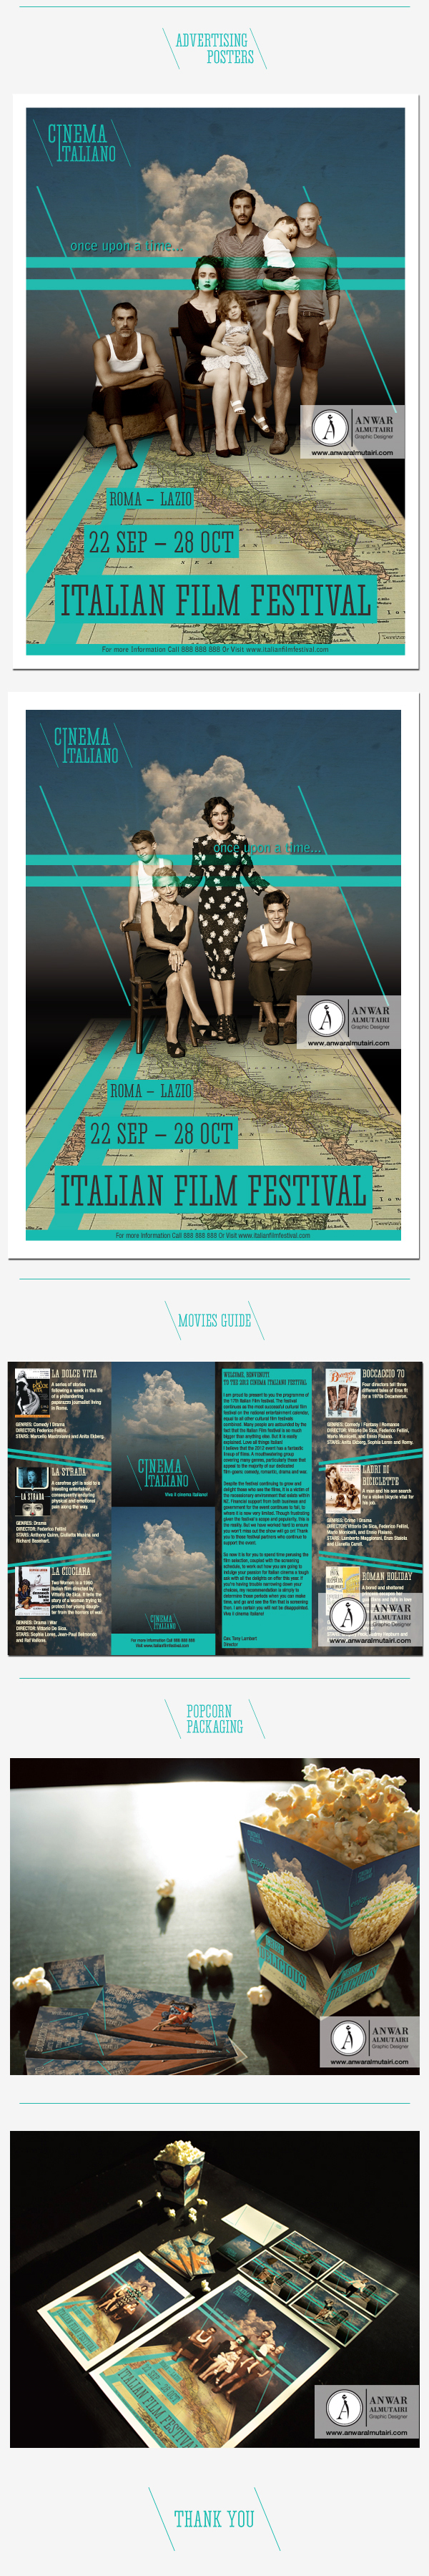 film festival  collage posters postcards Promotion Series Italian Cinema Festival italian logo magazine